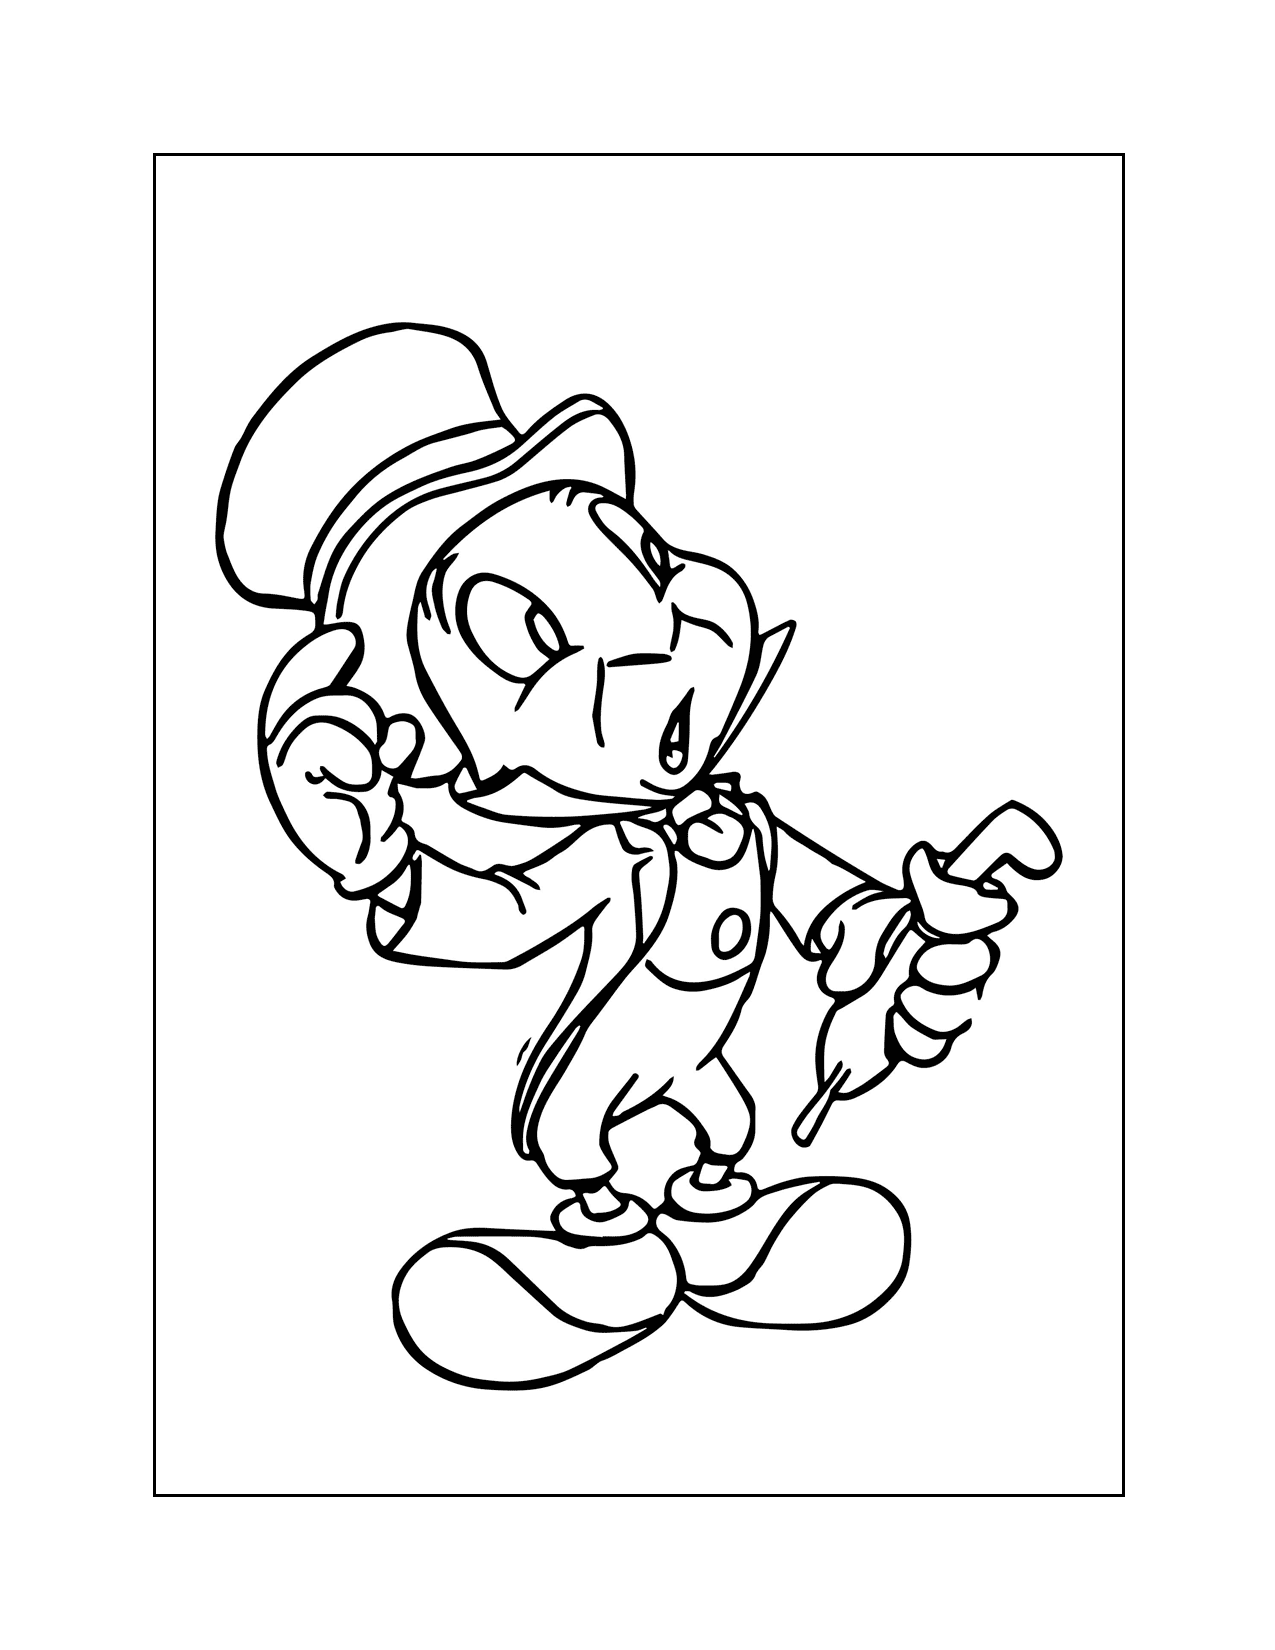 Jiminy Cricket Coloring Page